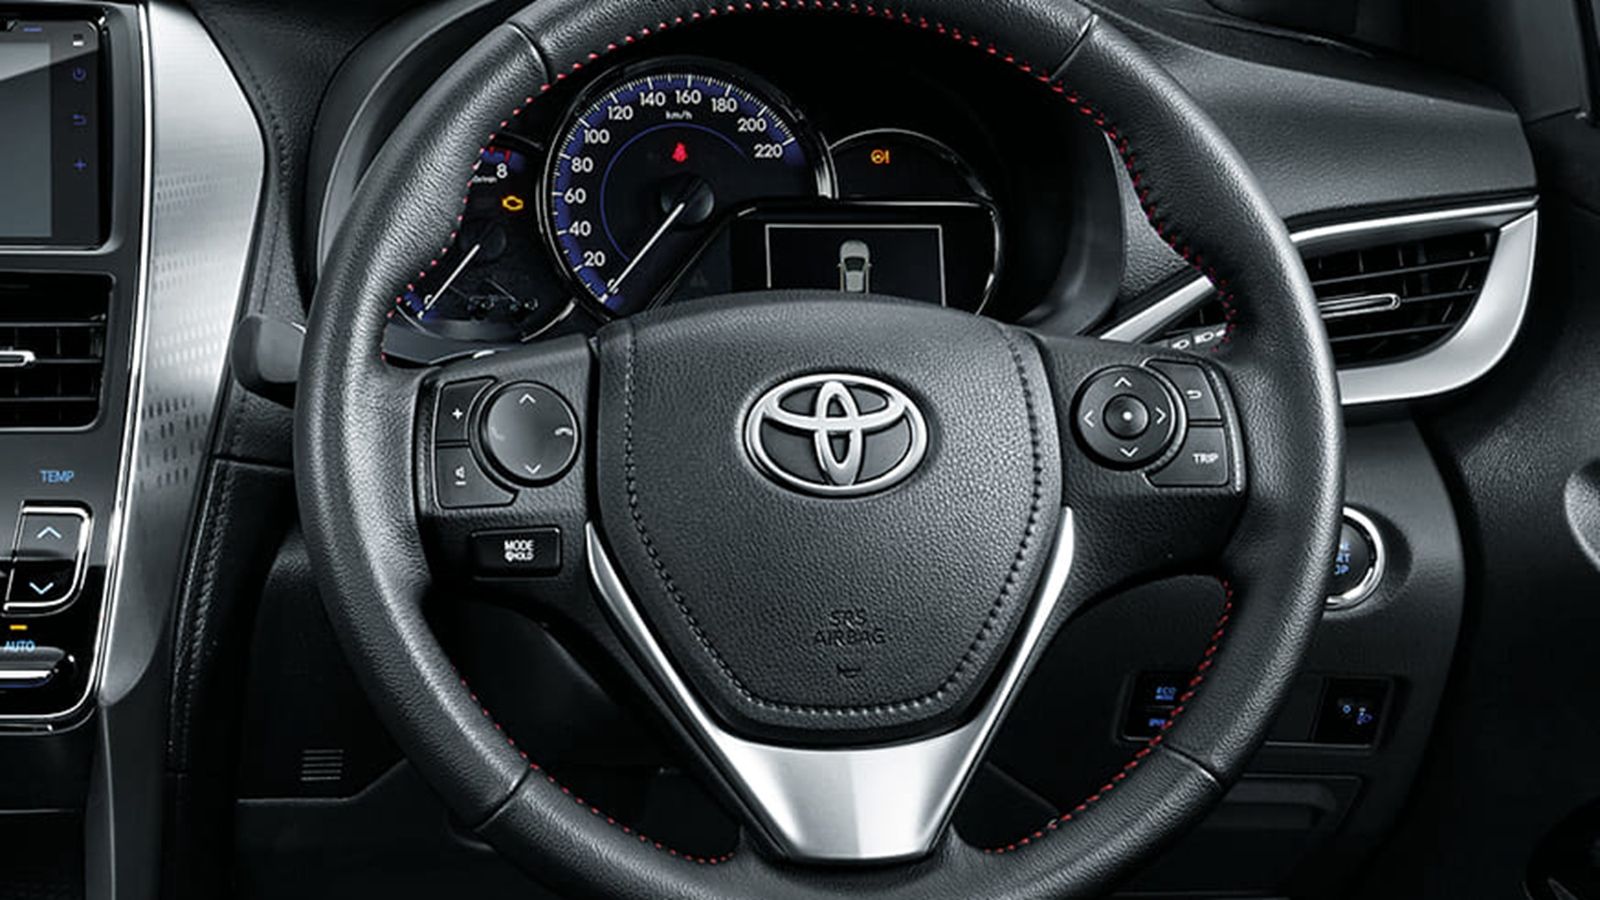 Toyota Yaris 1.5 S CVT GR Sport 7 AB 2022 Interior 002